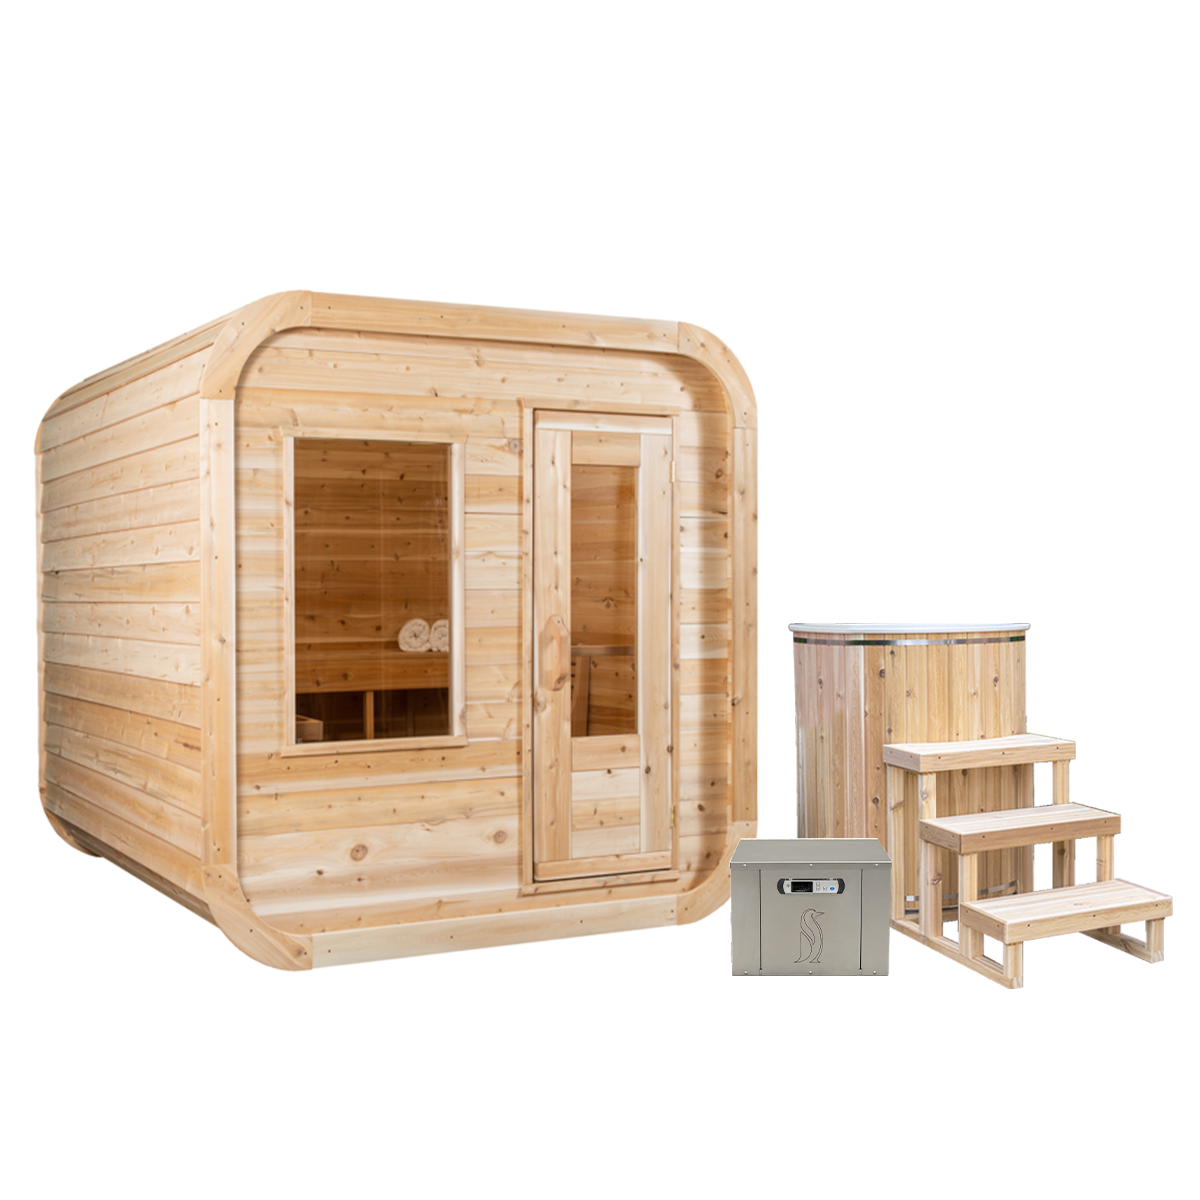 Dundalk LeisureCraft Canadian Timber Luna Sauna & Arctic Cold Plunge Tub Detox Package